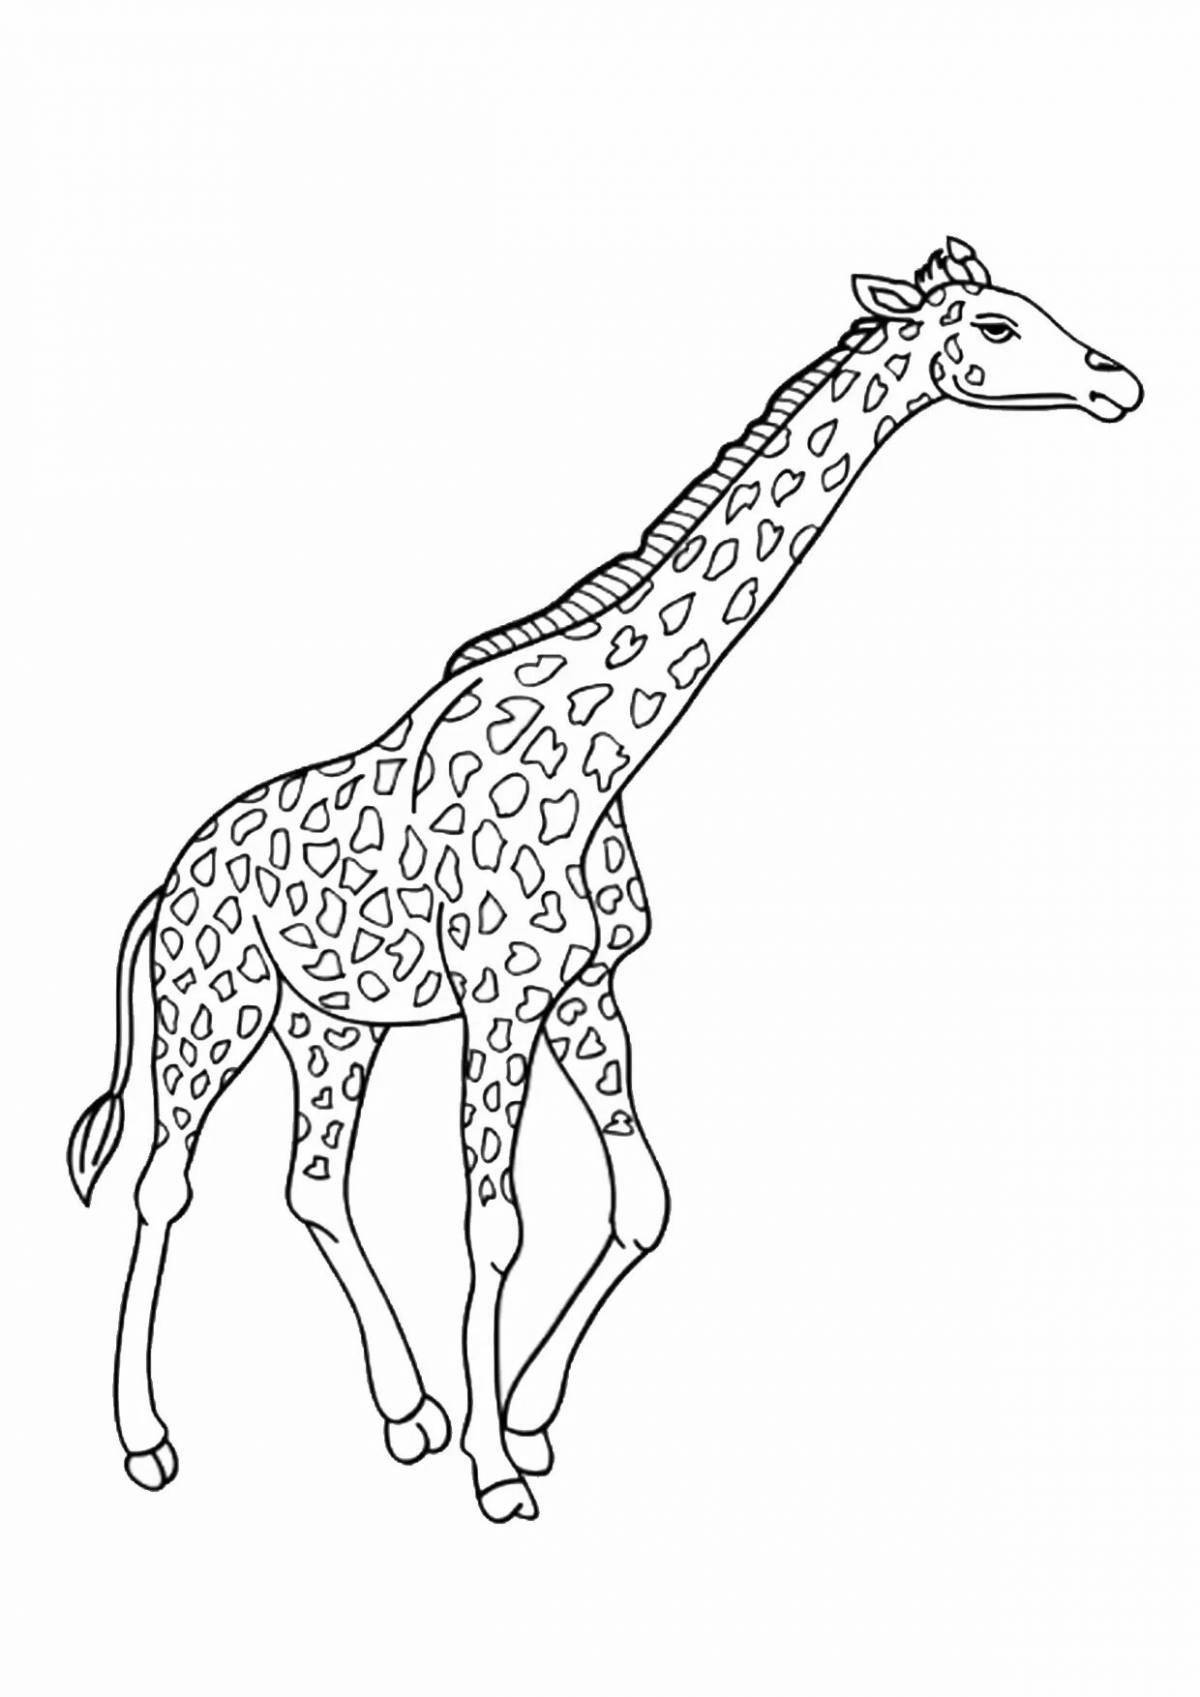 Giraffe picture for kids #2